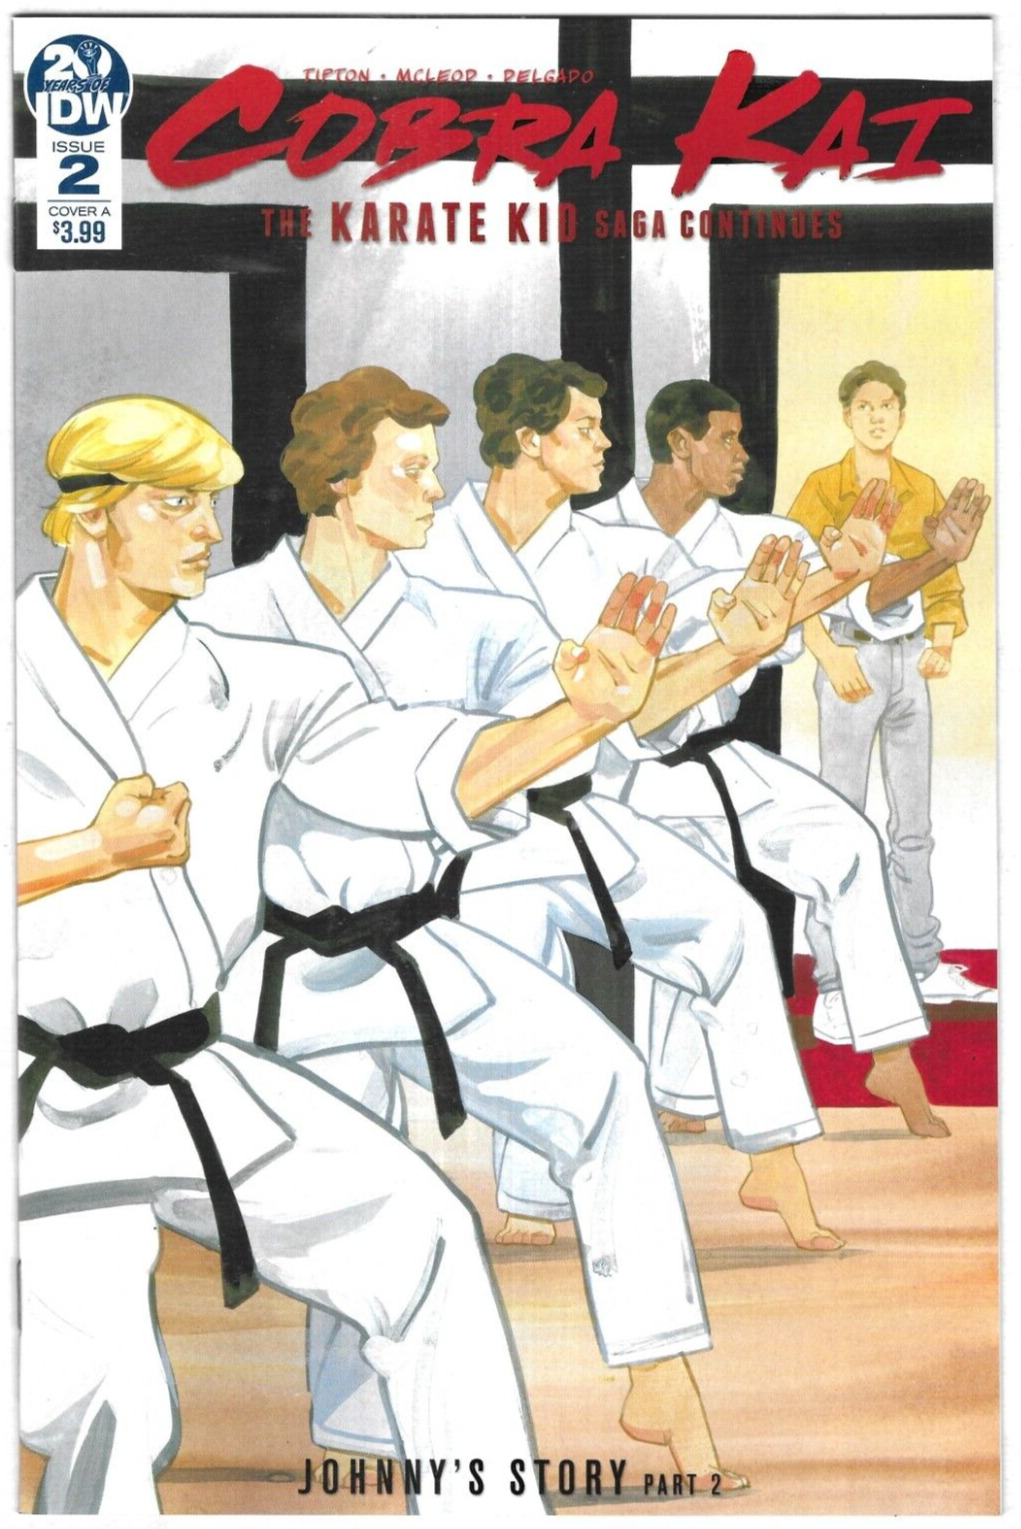 Cobra Kai Karate Kid Saga Continues Comic 2 First Print Cover A McLeod 2019 IDW